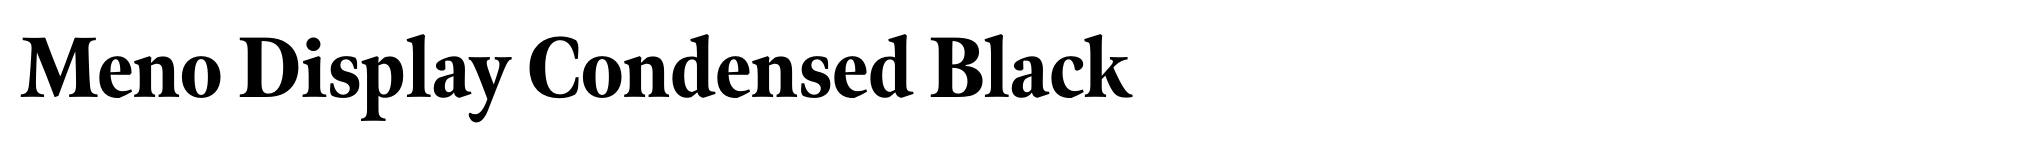 Meno Display Condensed Black image